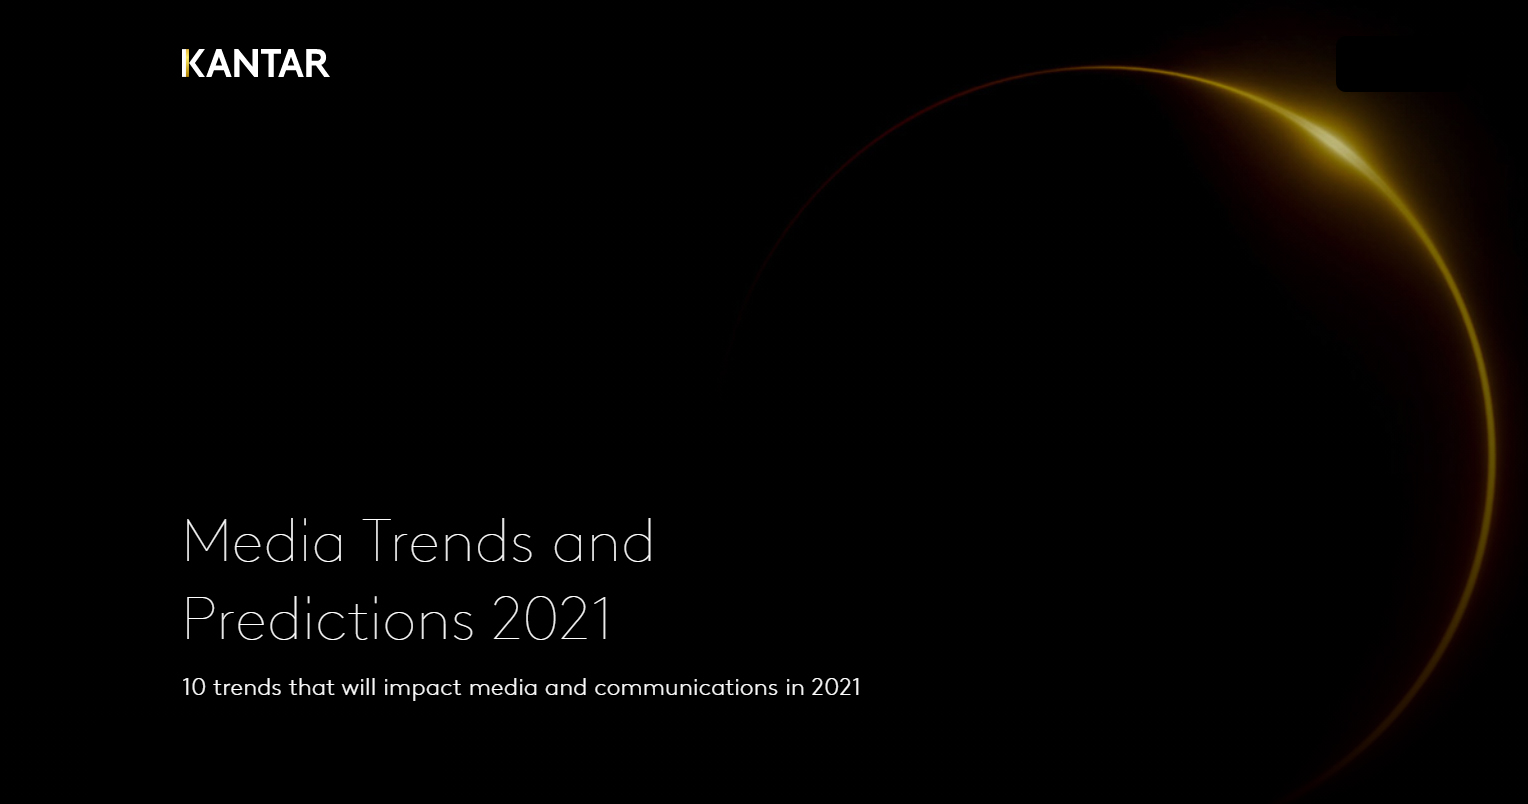 Strategies that will shape 2021’s media landscape